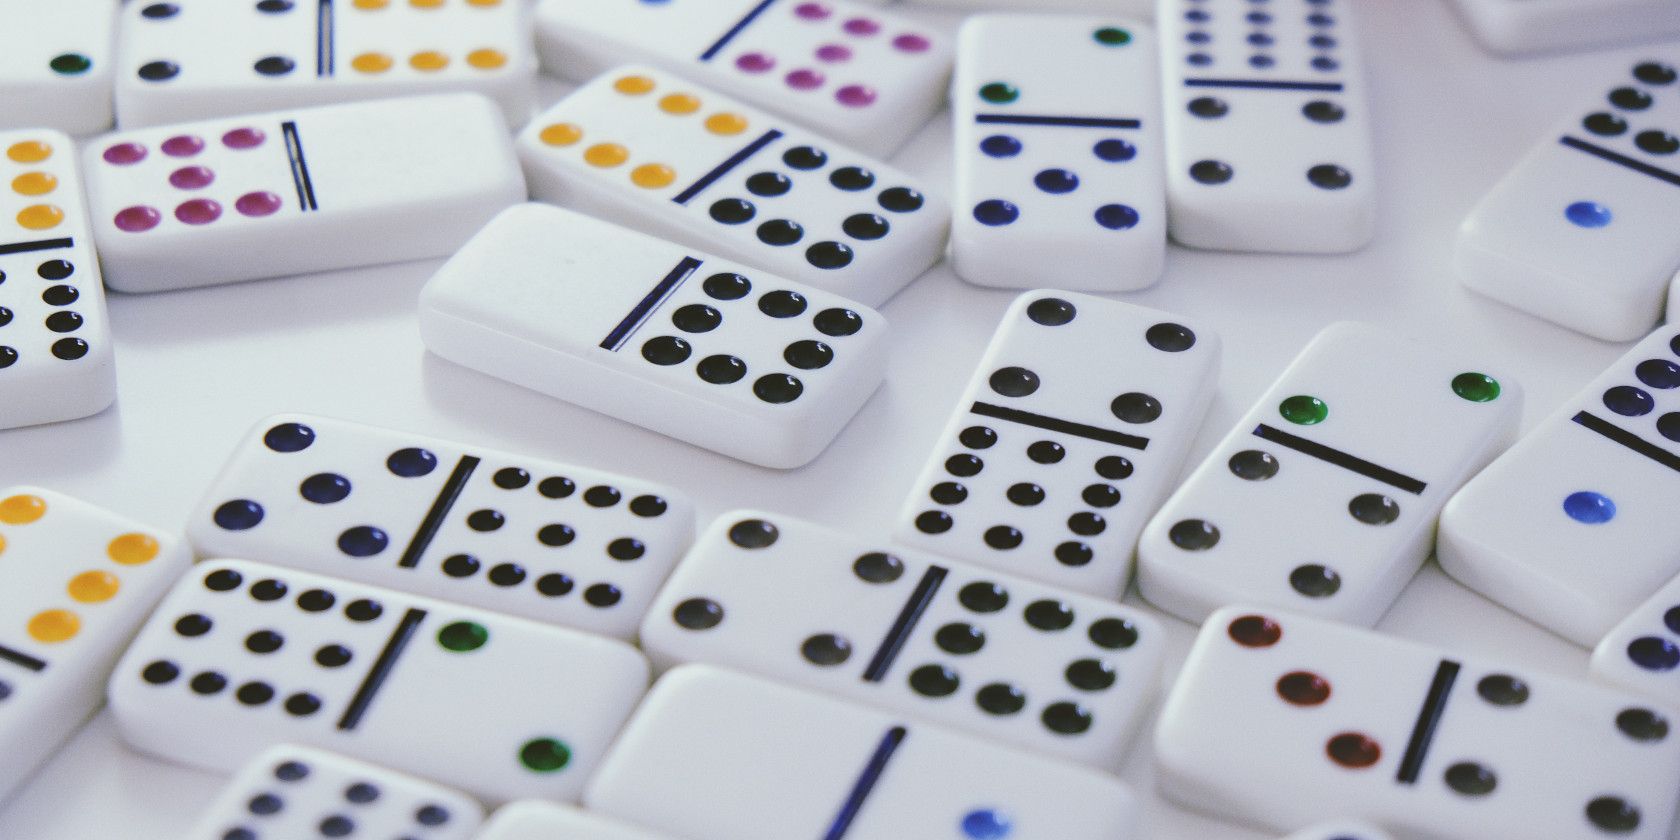 download free dominoes